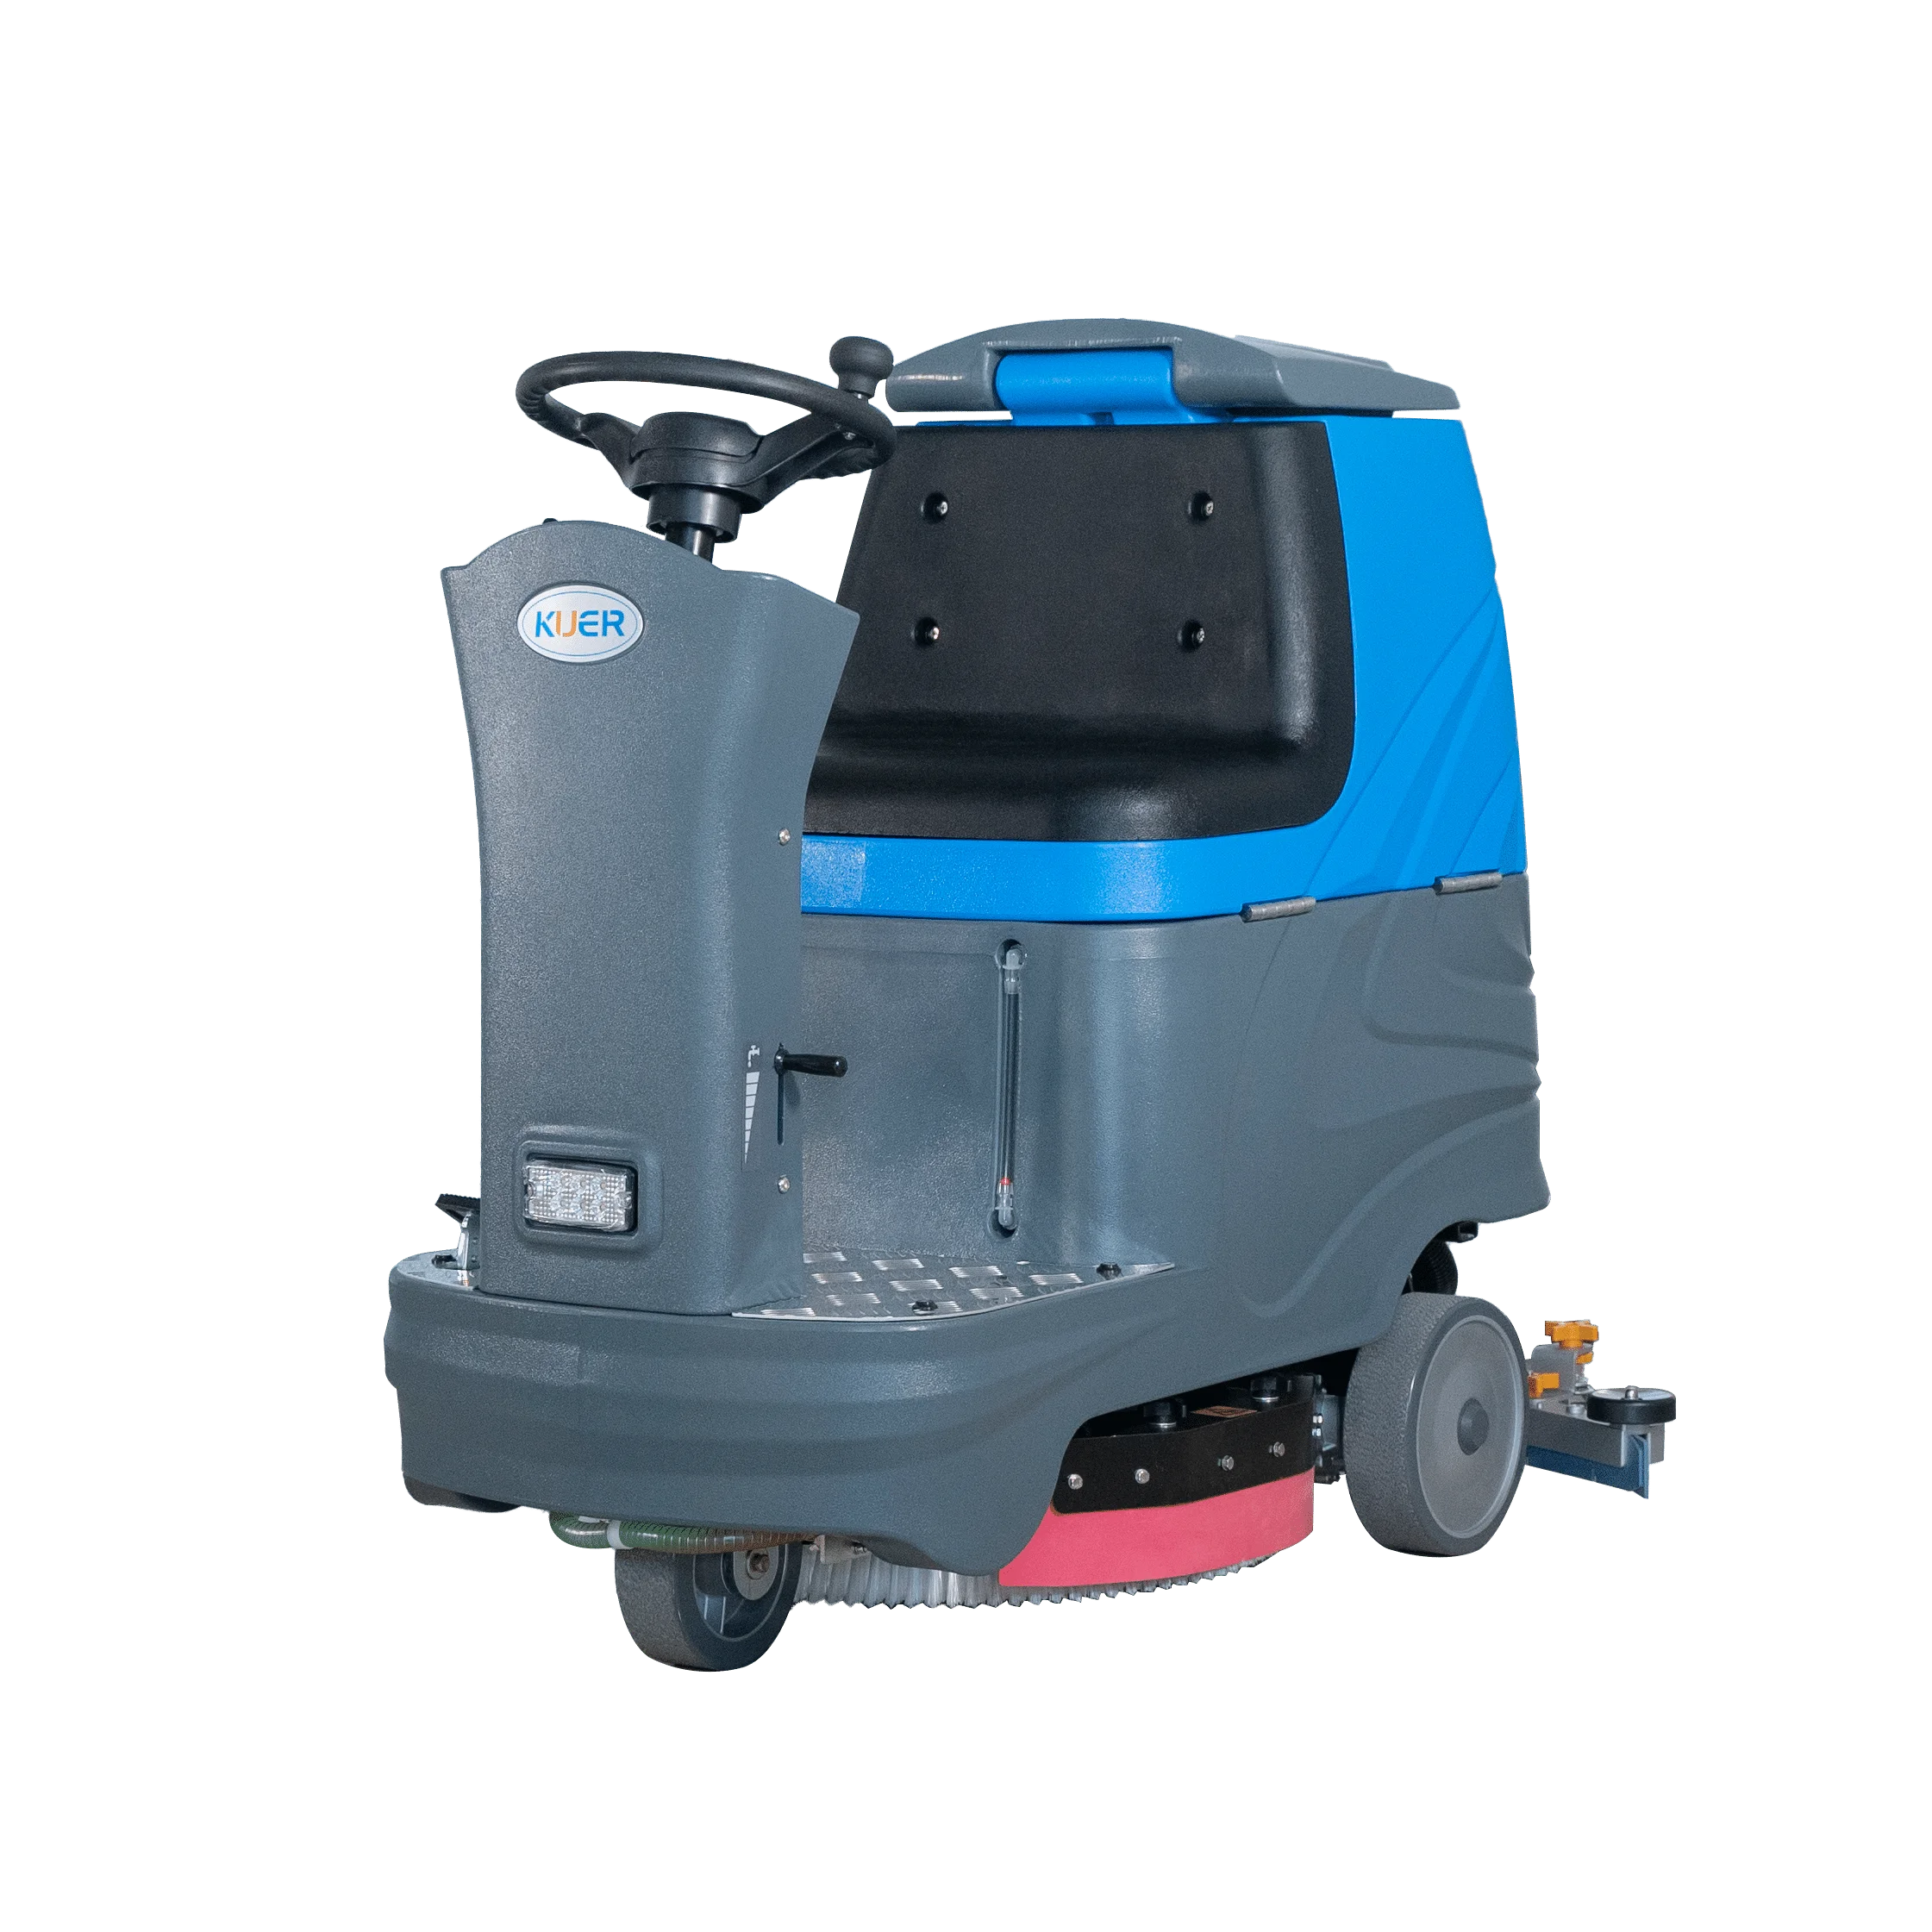 KUER 21″ Single Brush Ride-on Floor Scrubber Machine with Battery | KR-XJ60D 35,520 ft²/hr